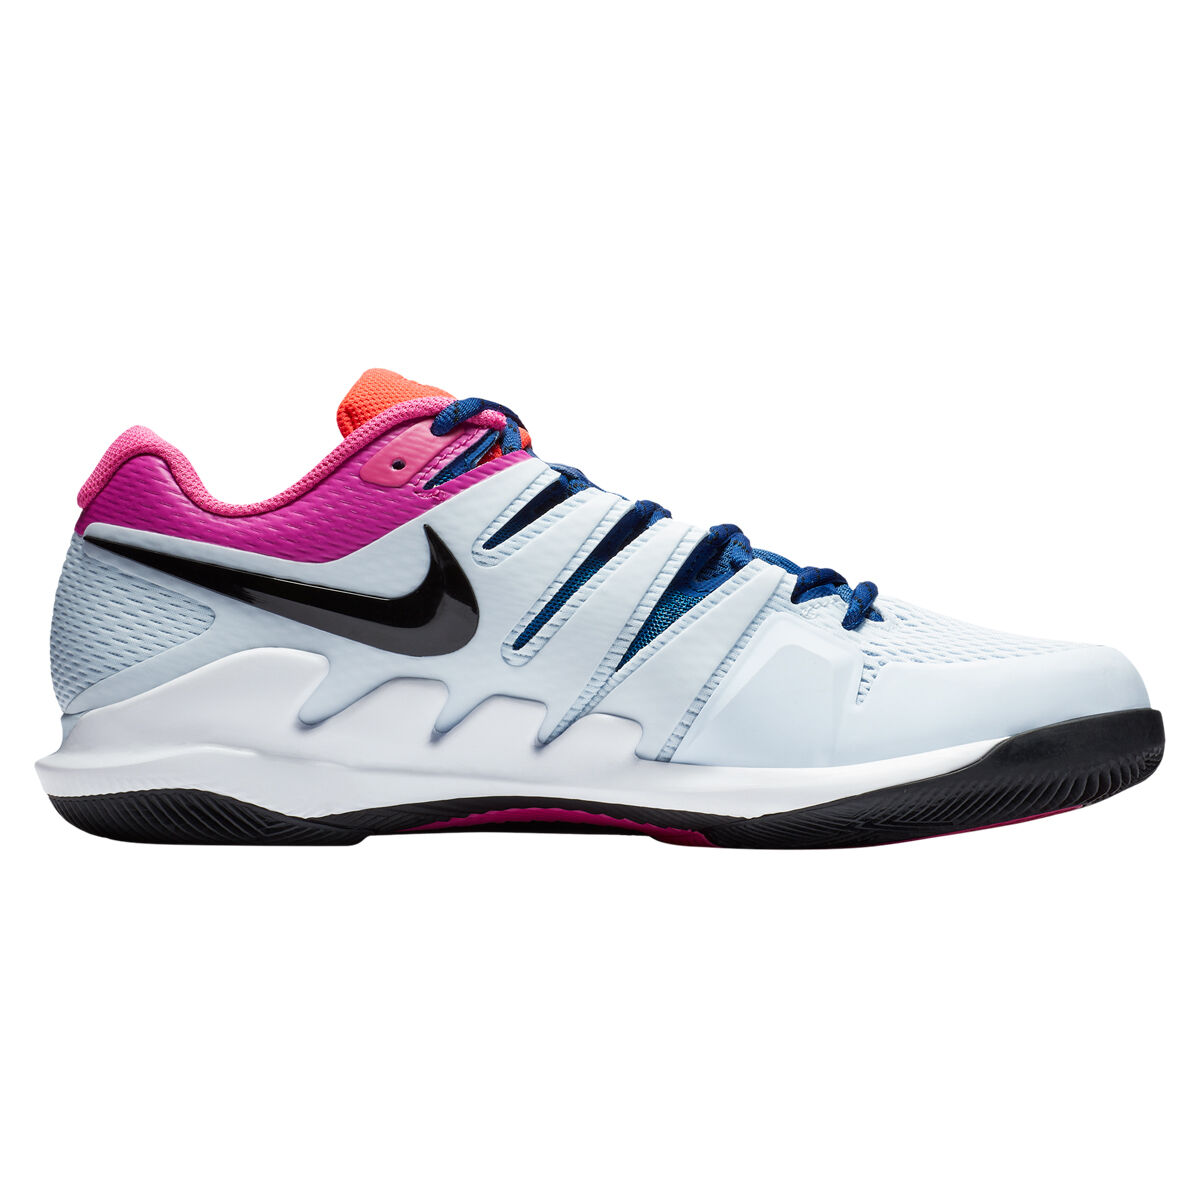 rebel sport tennis shoes